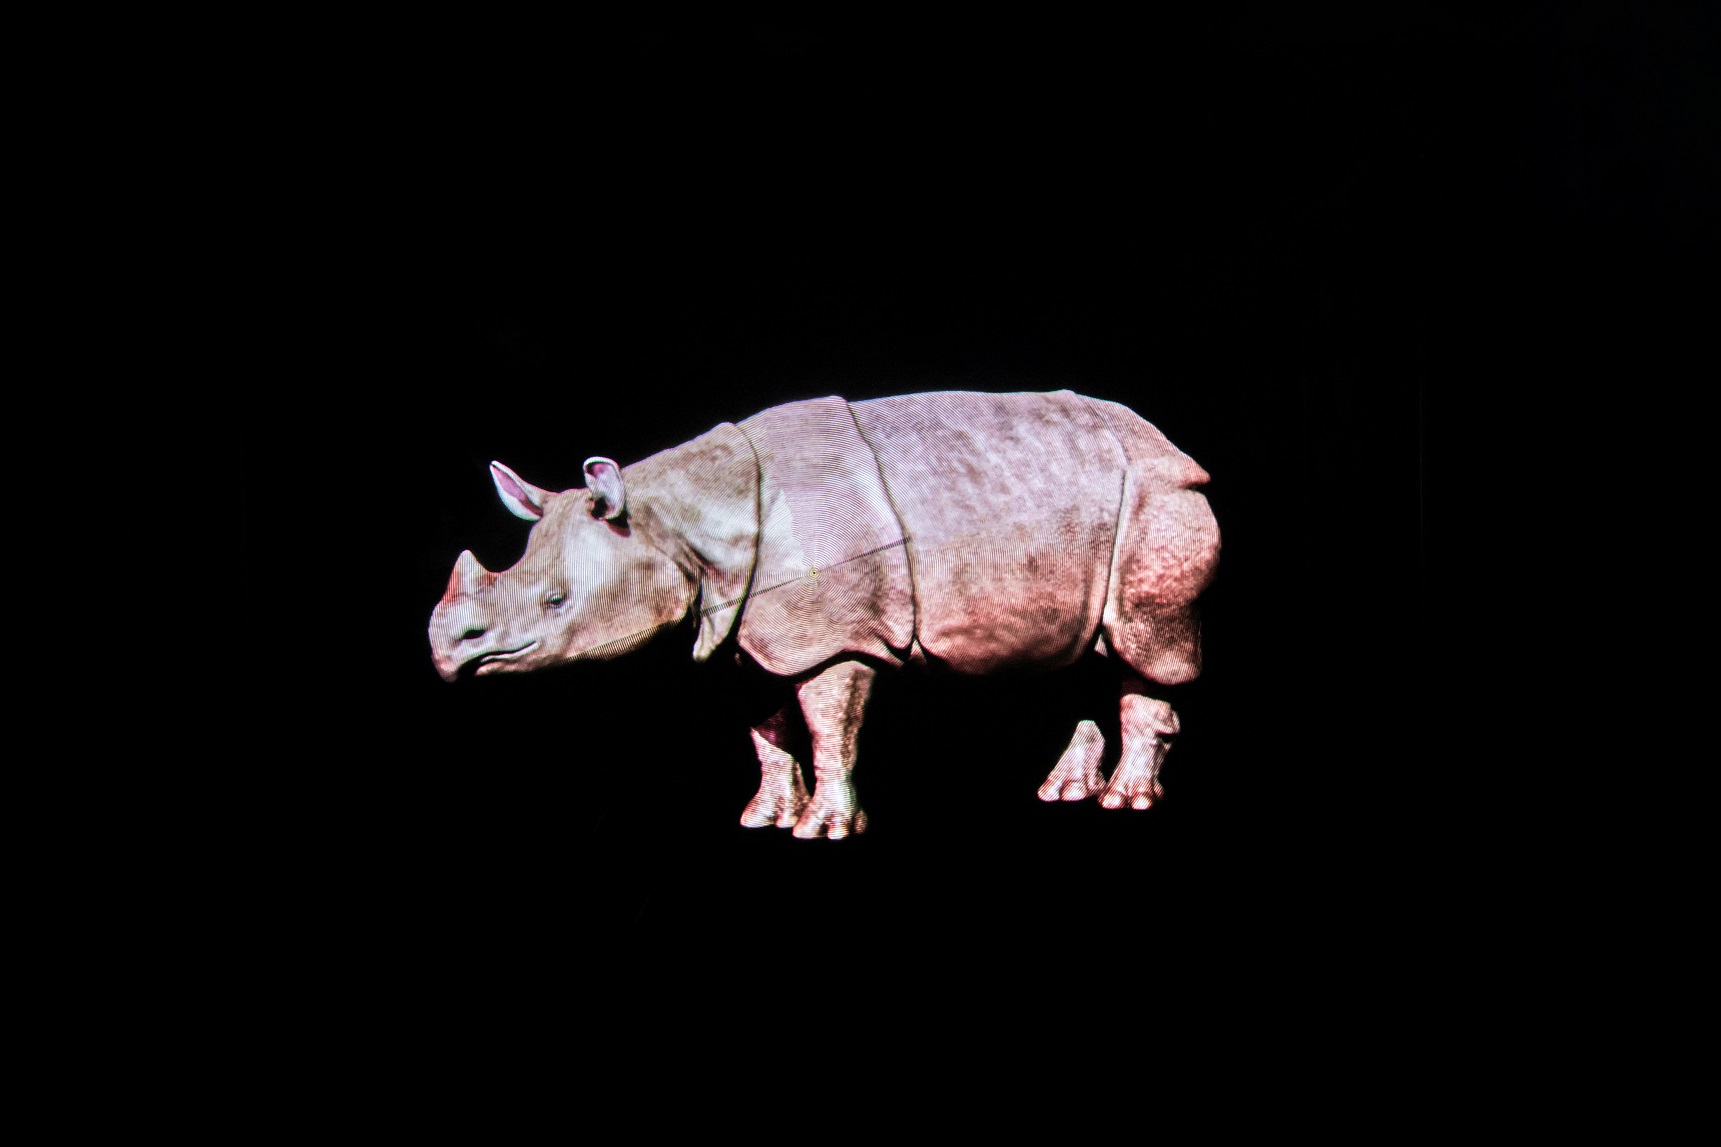 Holographic image of a Javan rhino to raise awareness of critically endangered animal